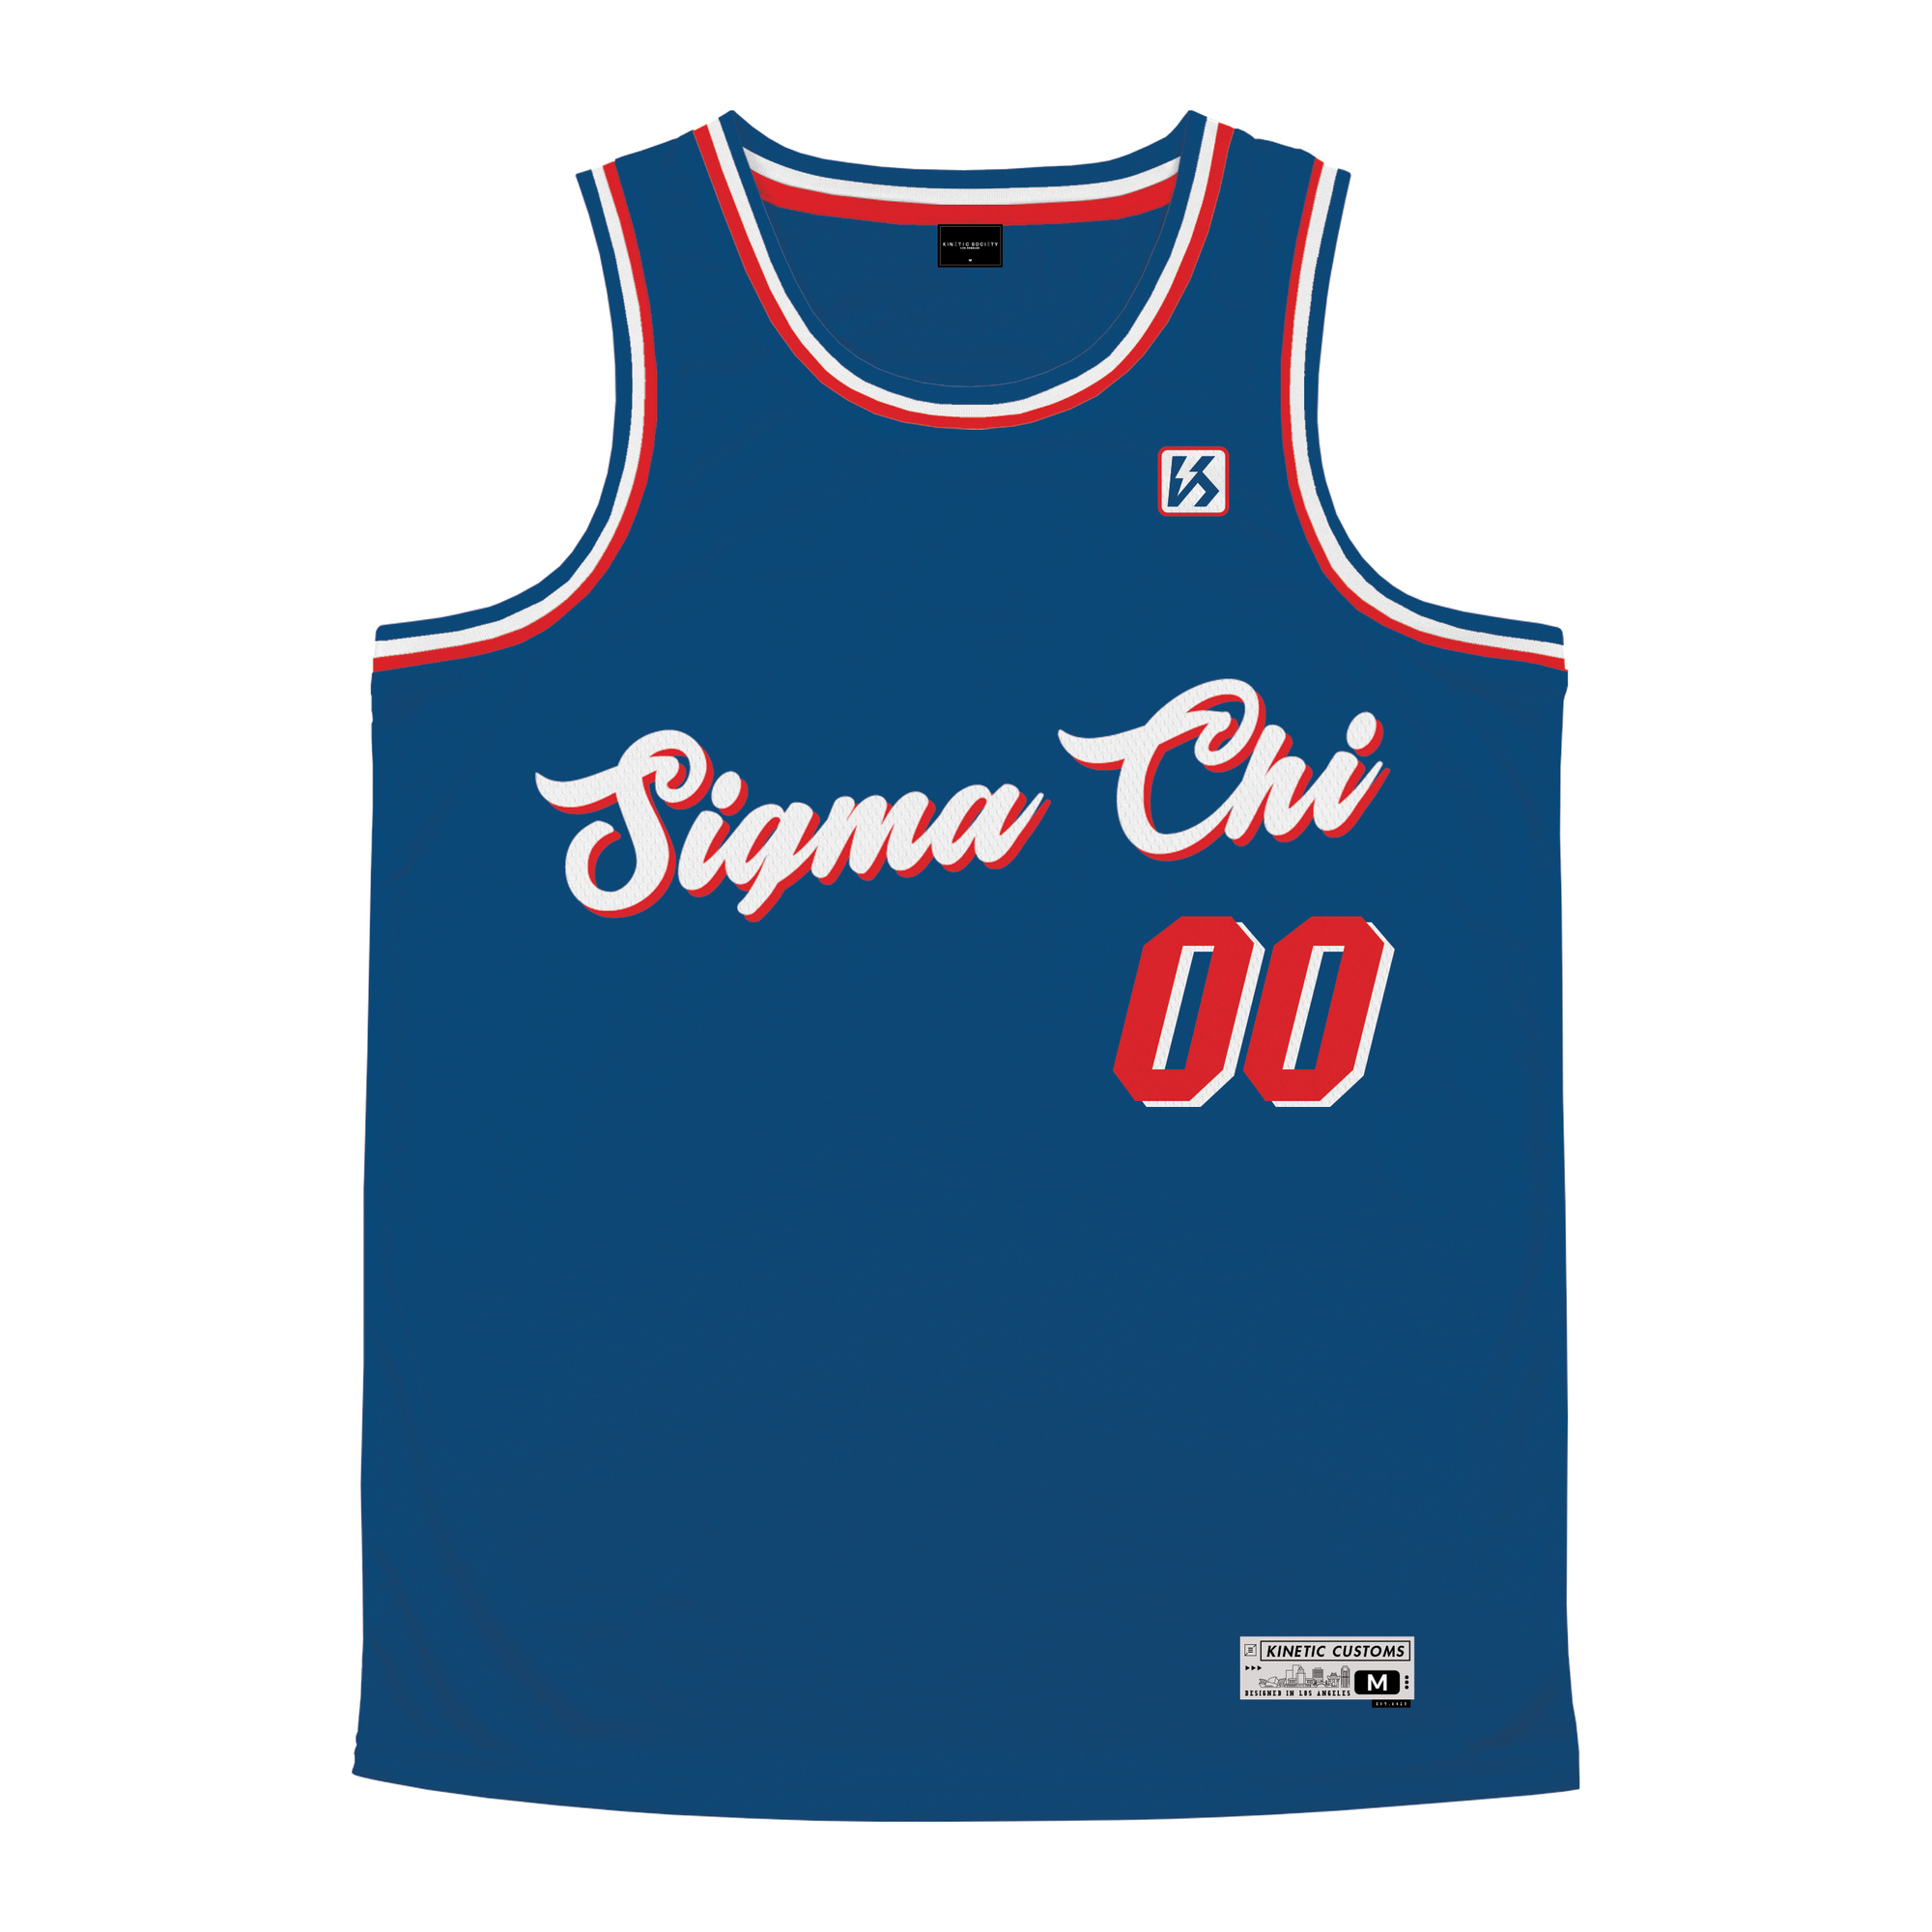 Sigma Chi - The Dream Basketball Jersey